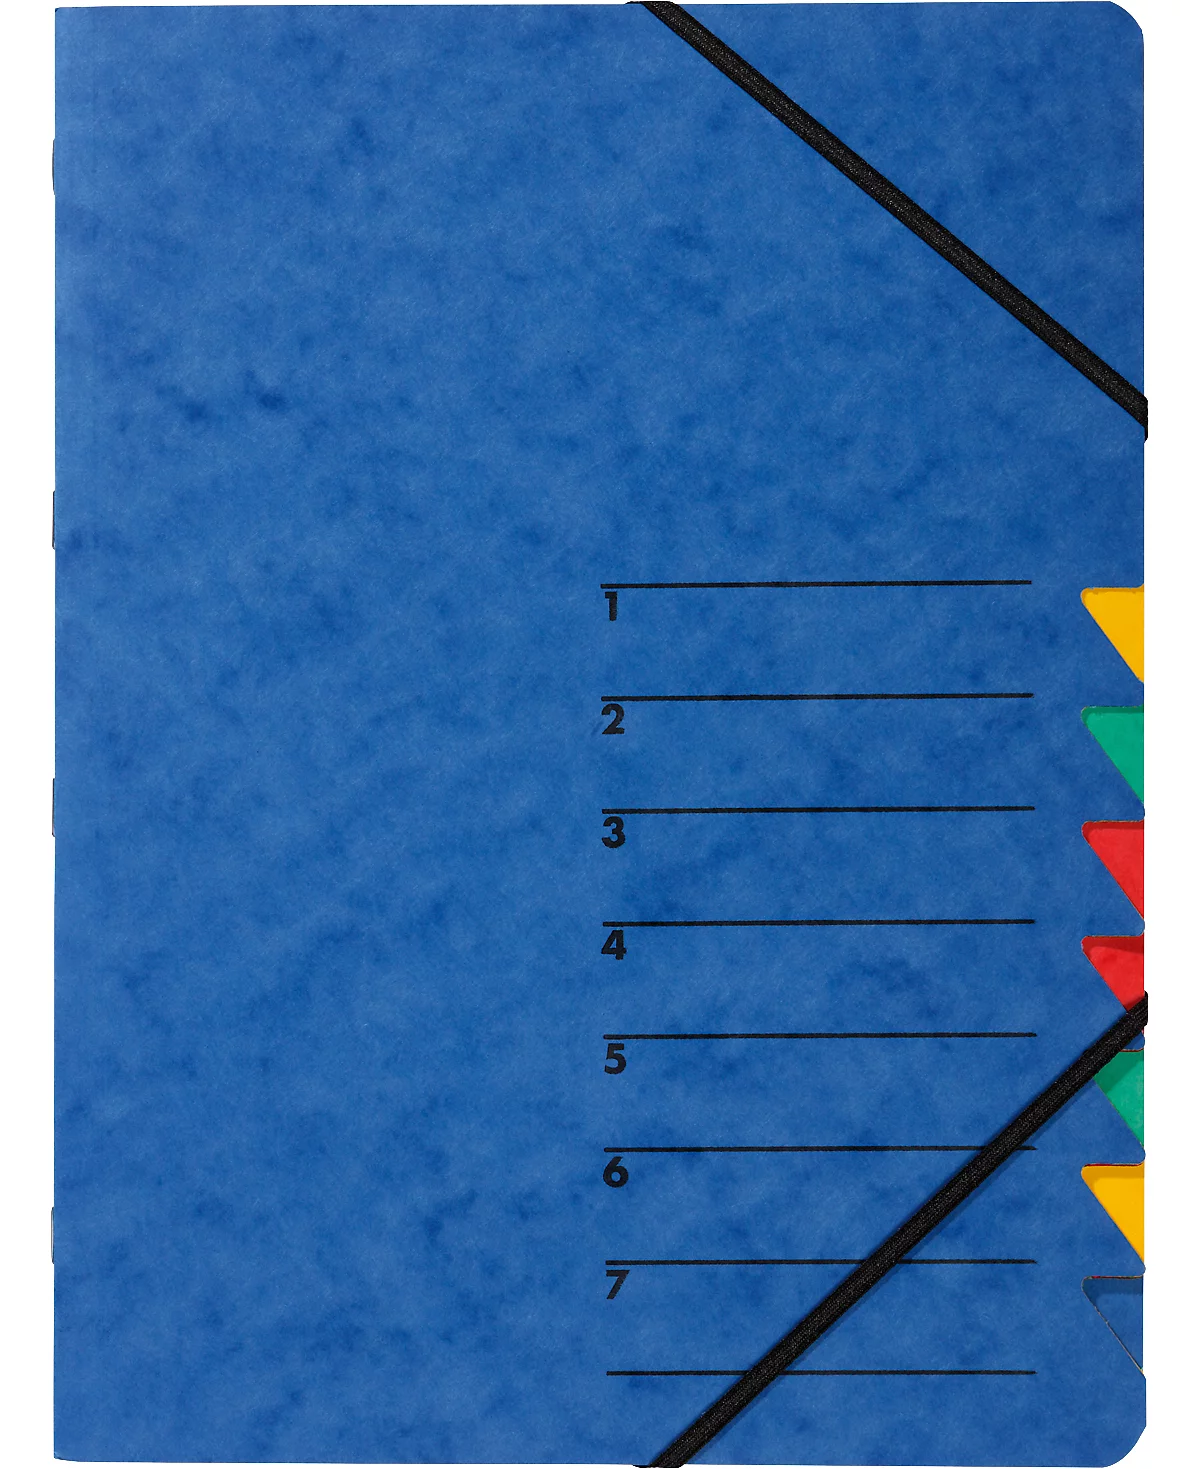 PAGNA documentenmap Easy, A4, elastieksluiting, 7-delig, blauw